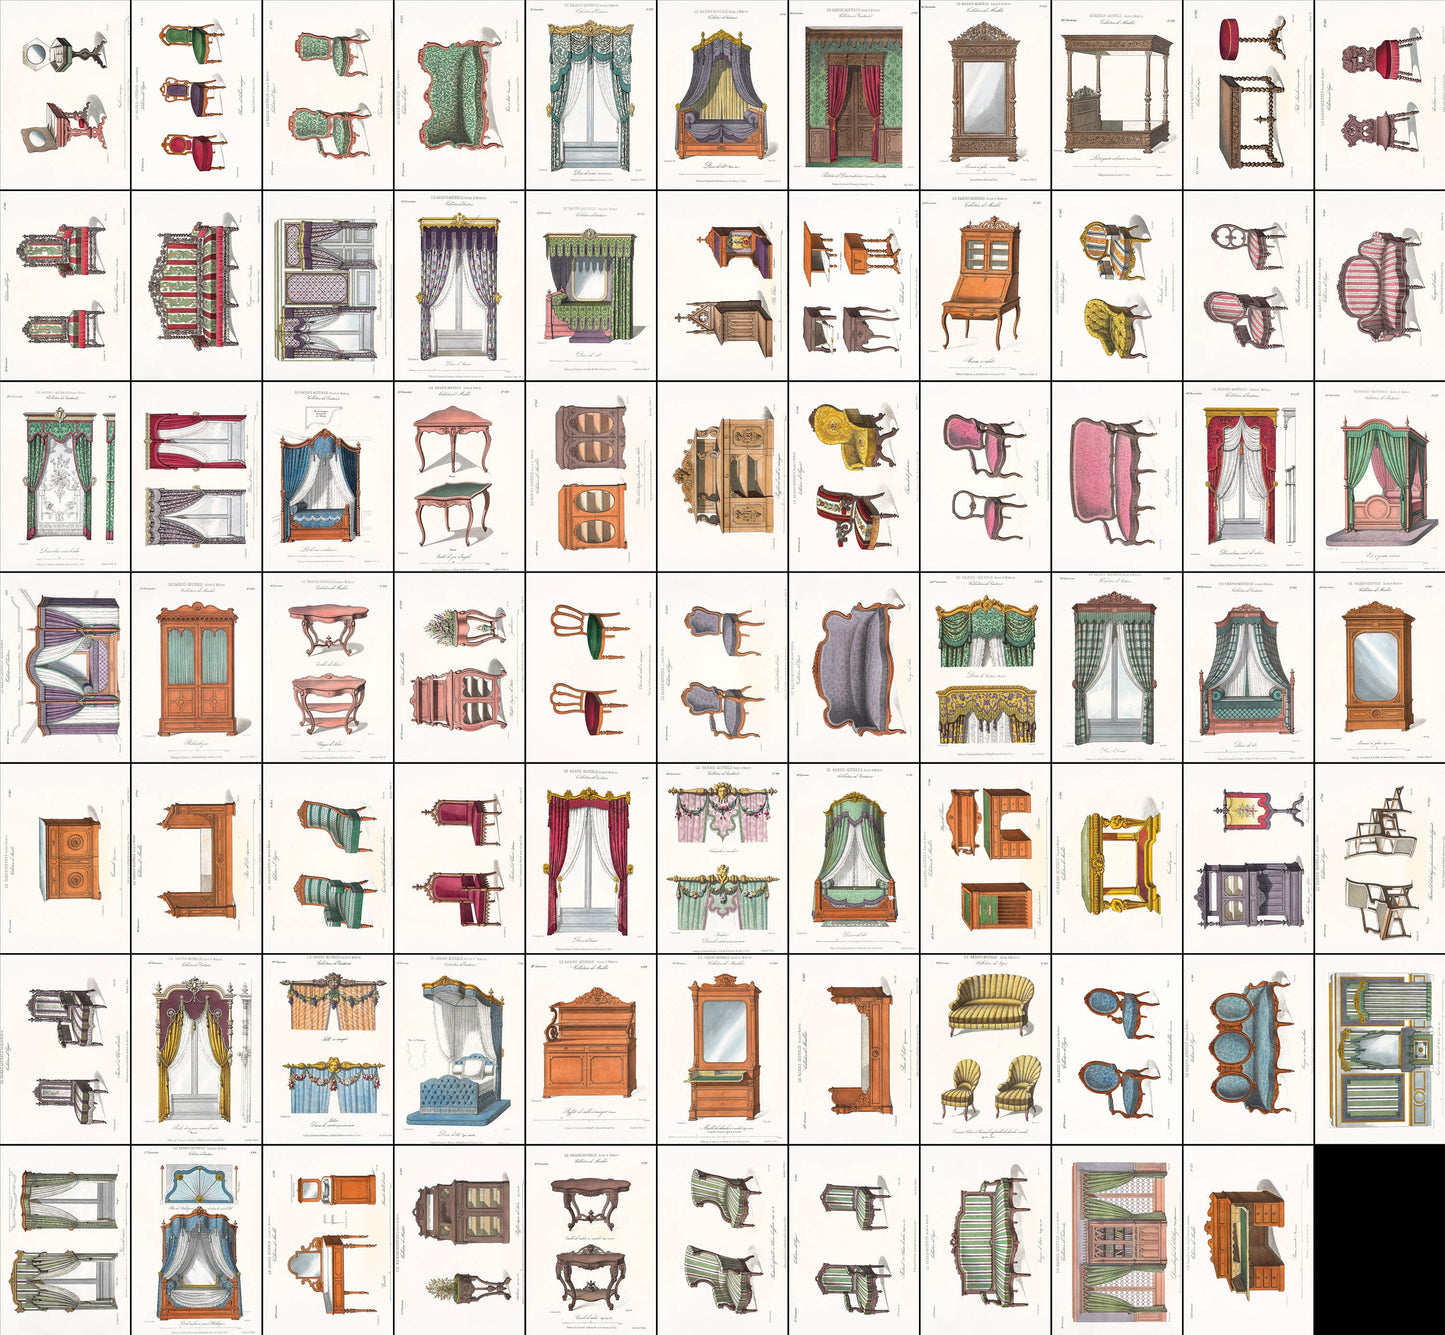 French Home Furniture & Decor Illustrations Set 5 [76 Images]